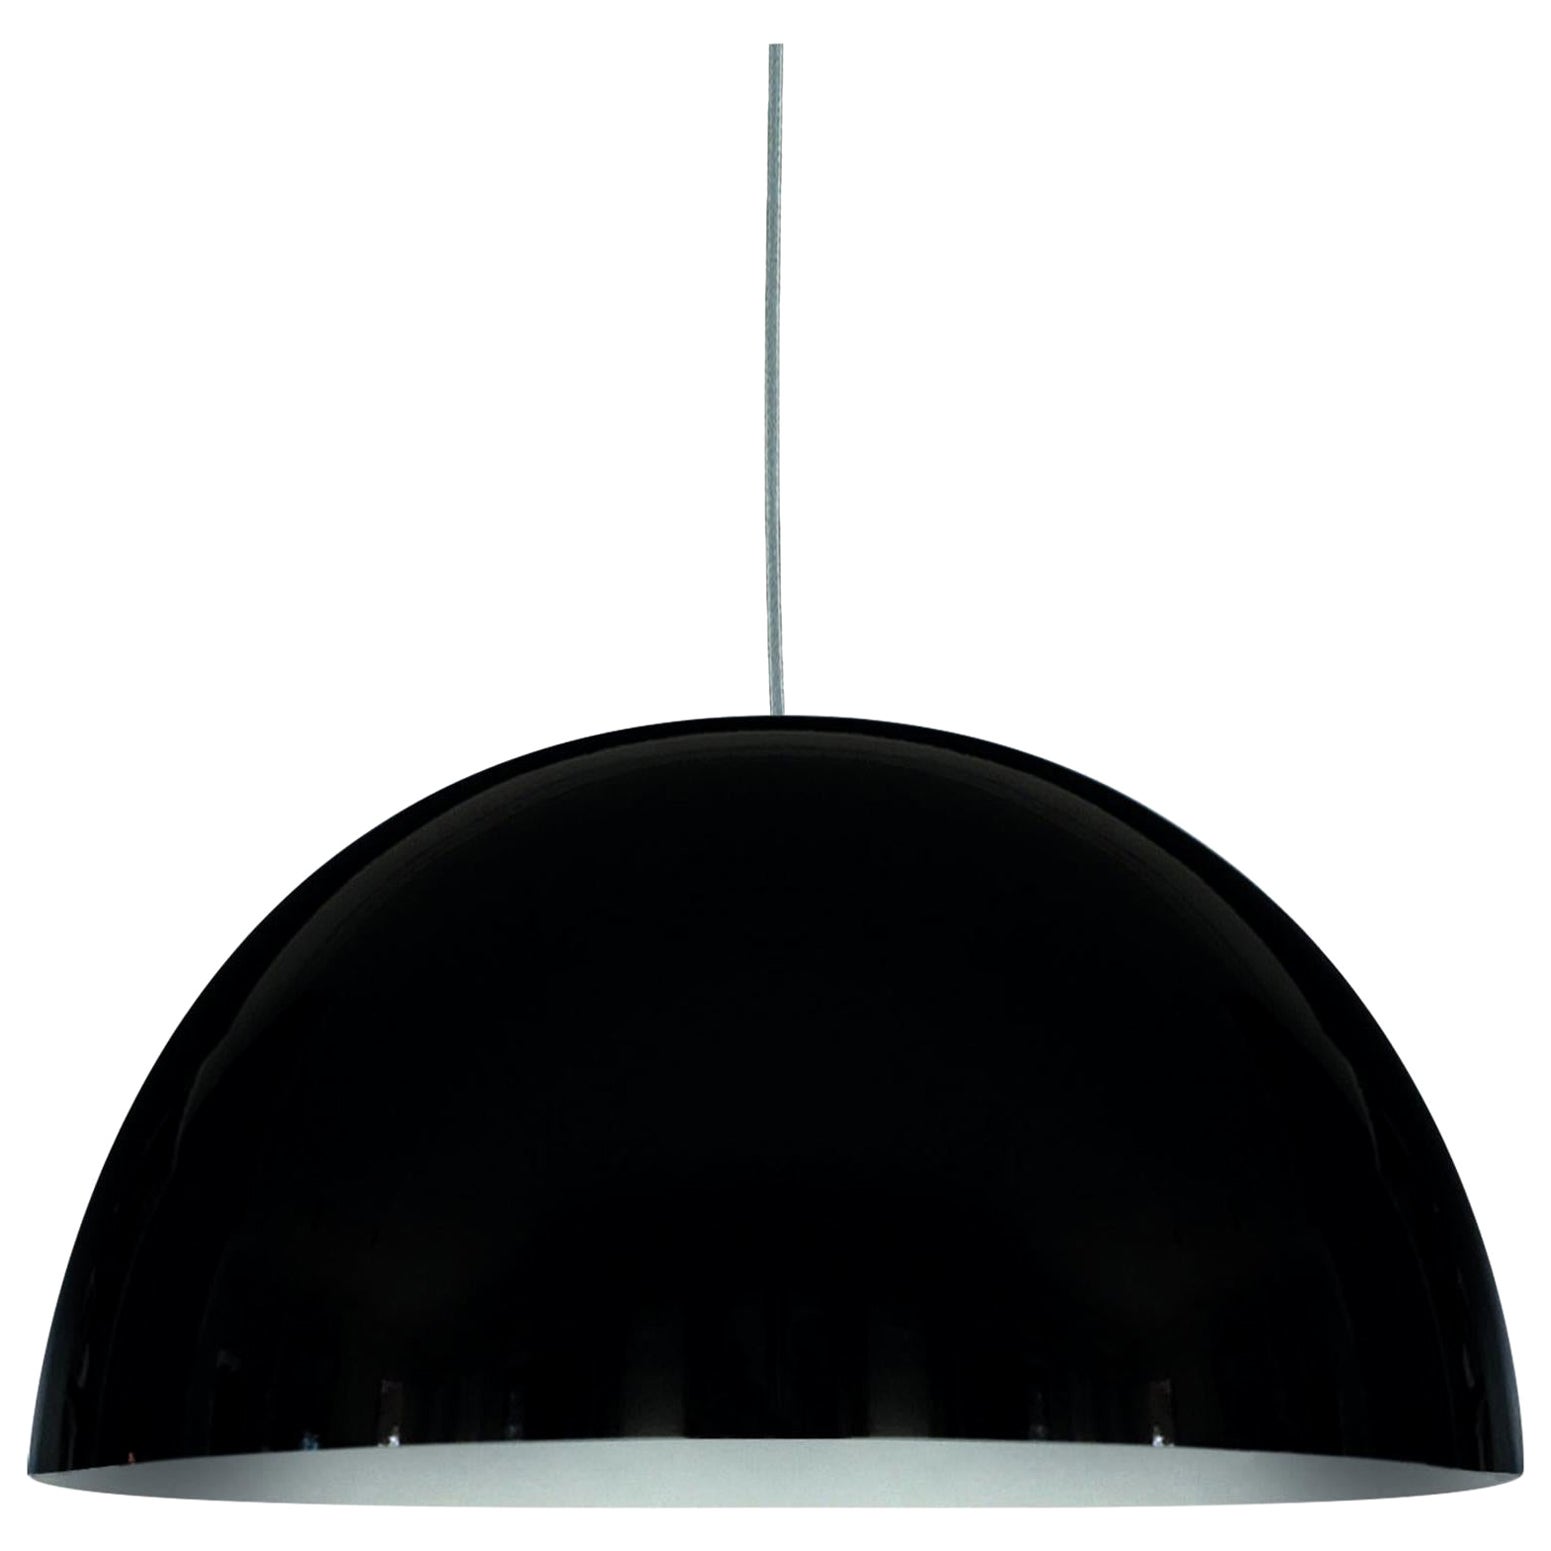 Vico Magistretti Suspension Lamps 'Sonora' Large Black by Oluce